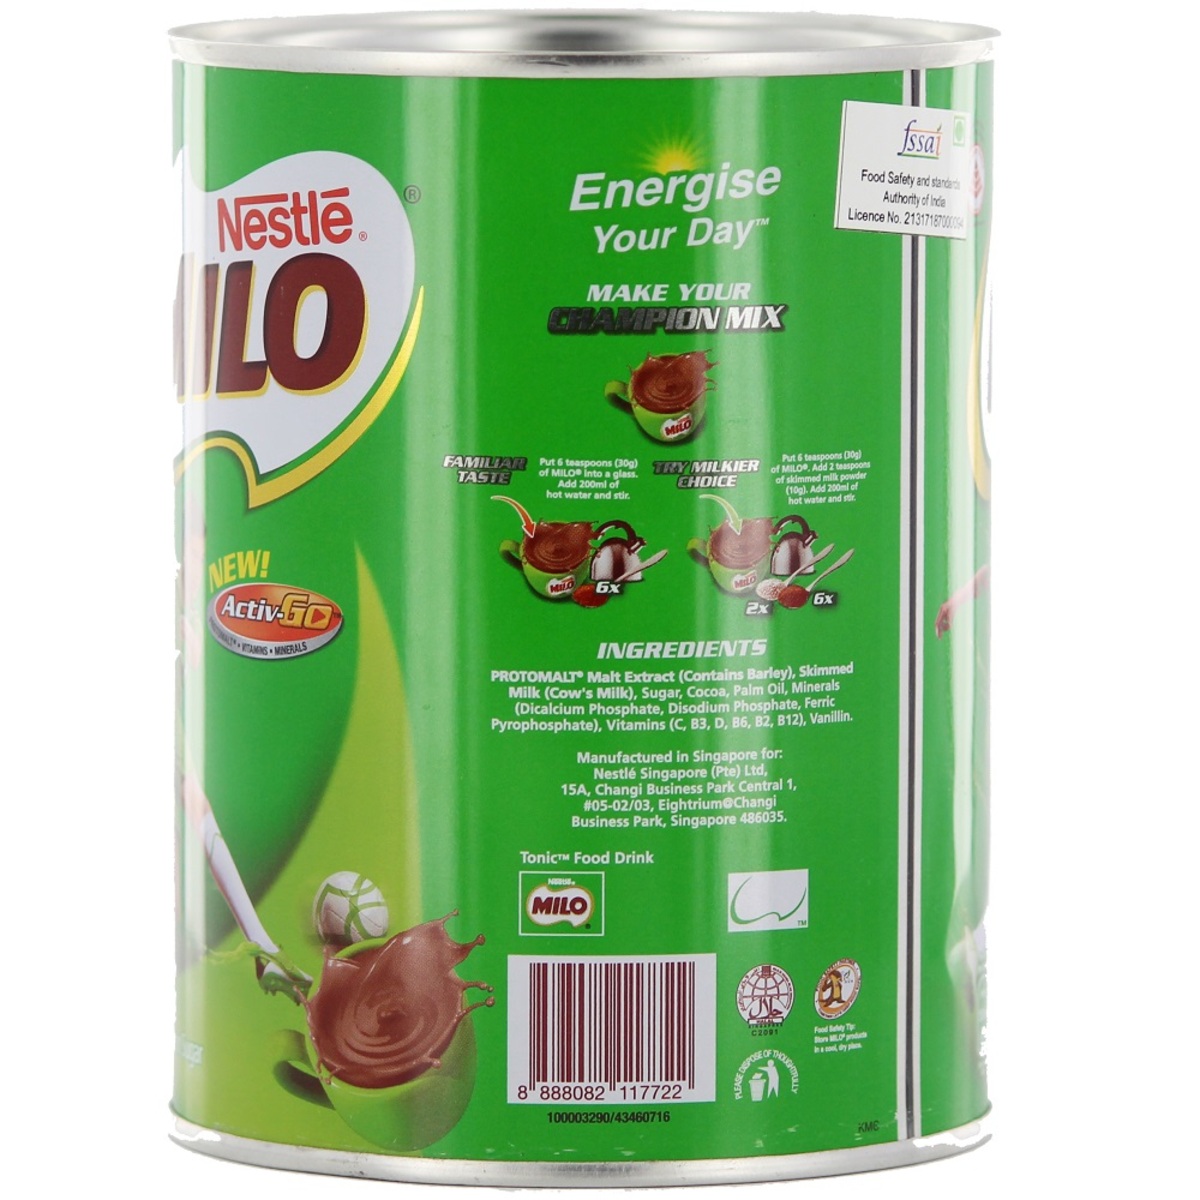 Nestle Milo 400g (Import)